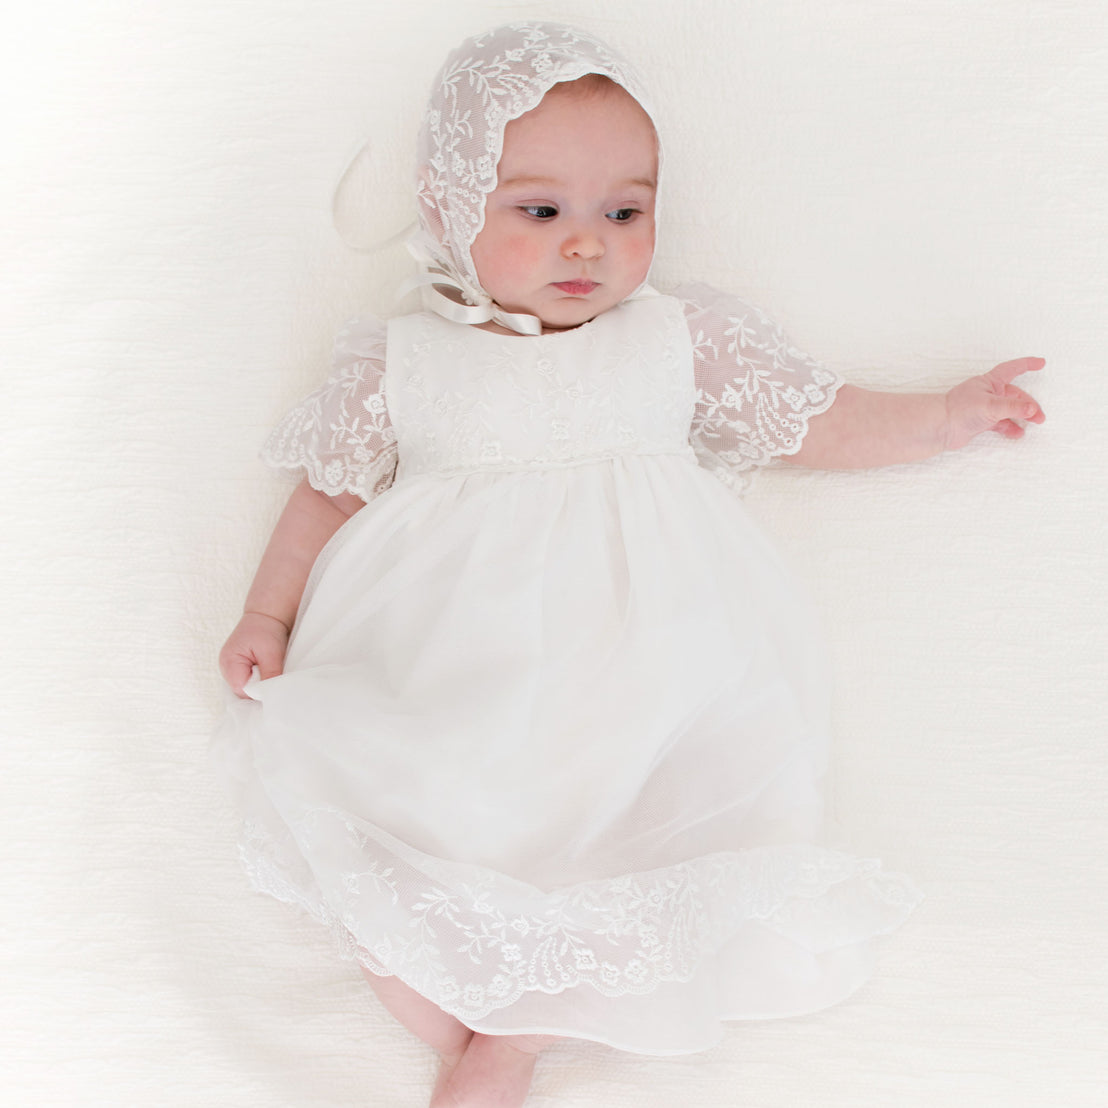 Alternative photo of baby girl wearing the Ella Lace Bonnet and Ella Romper Dress.